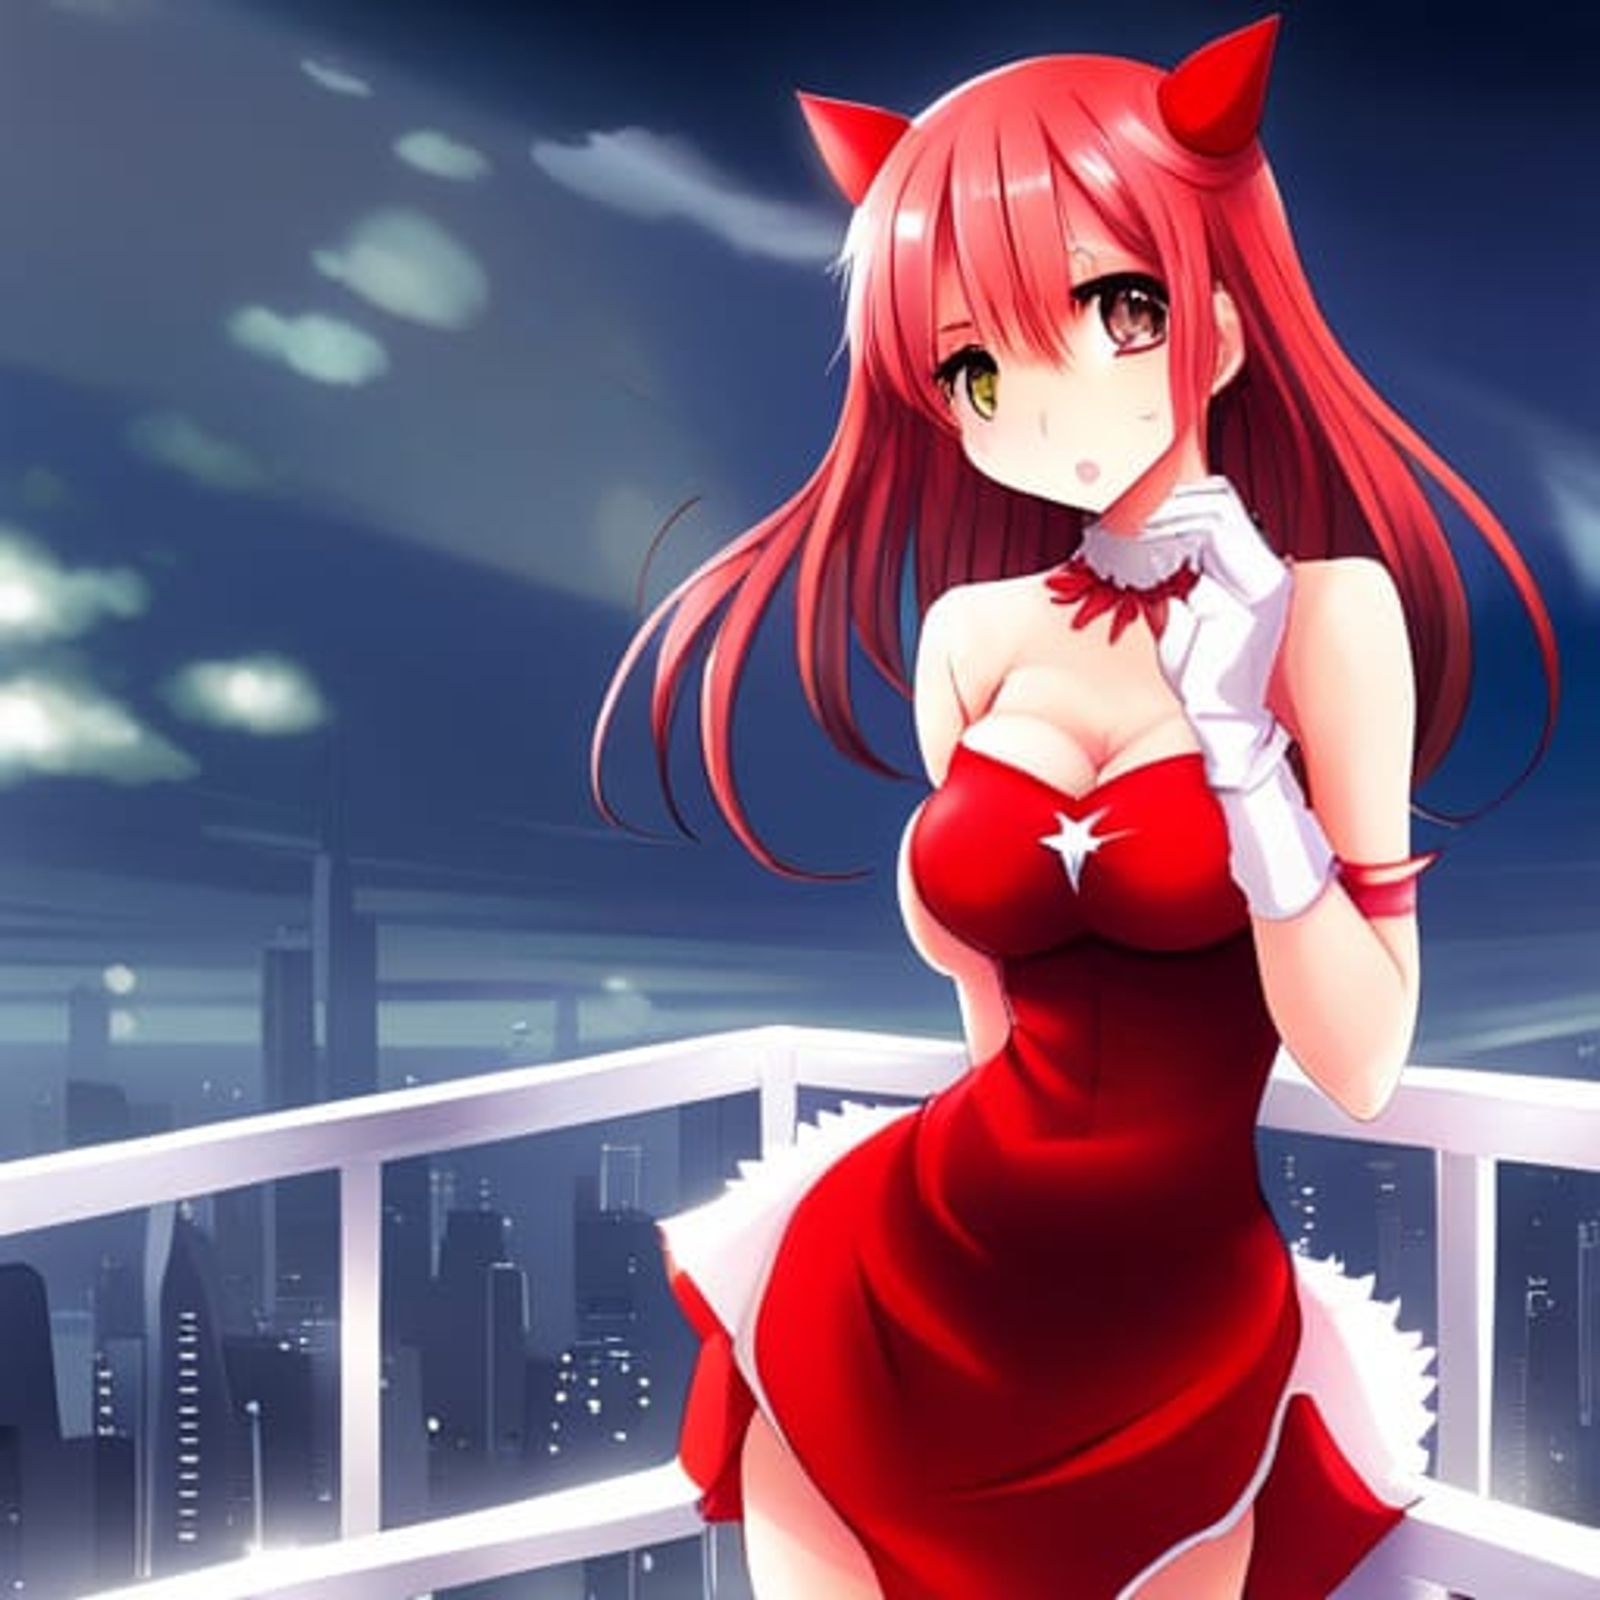 anime girl wearing red dress